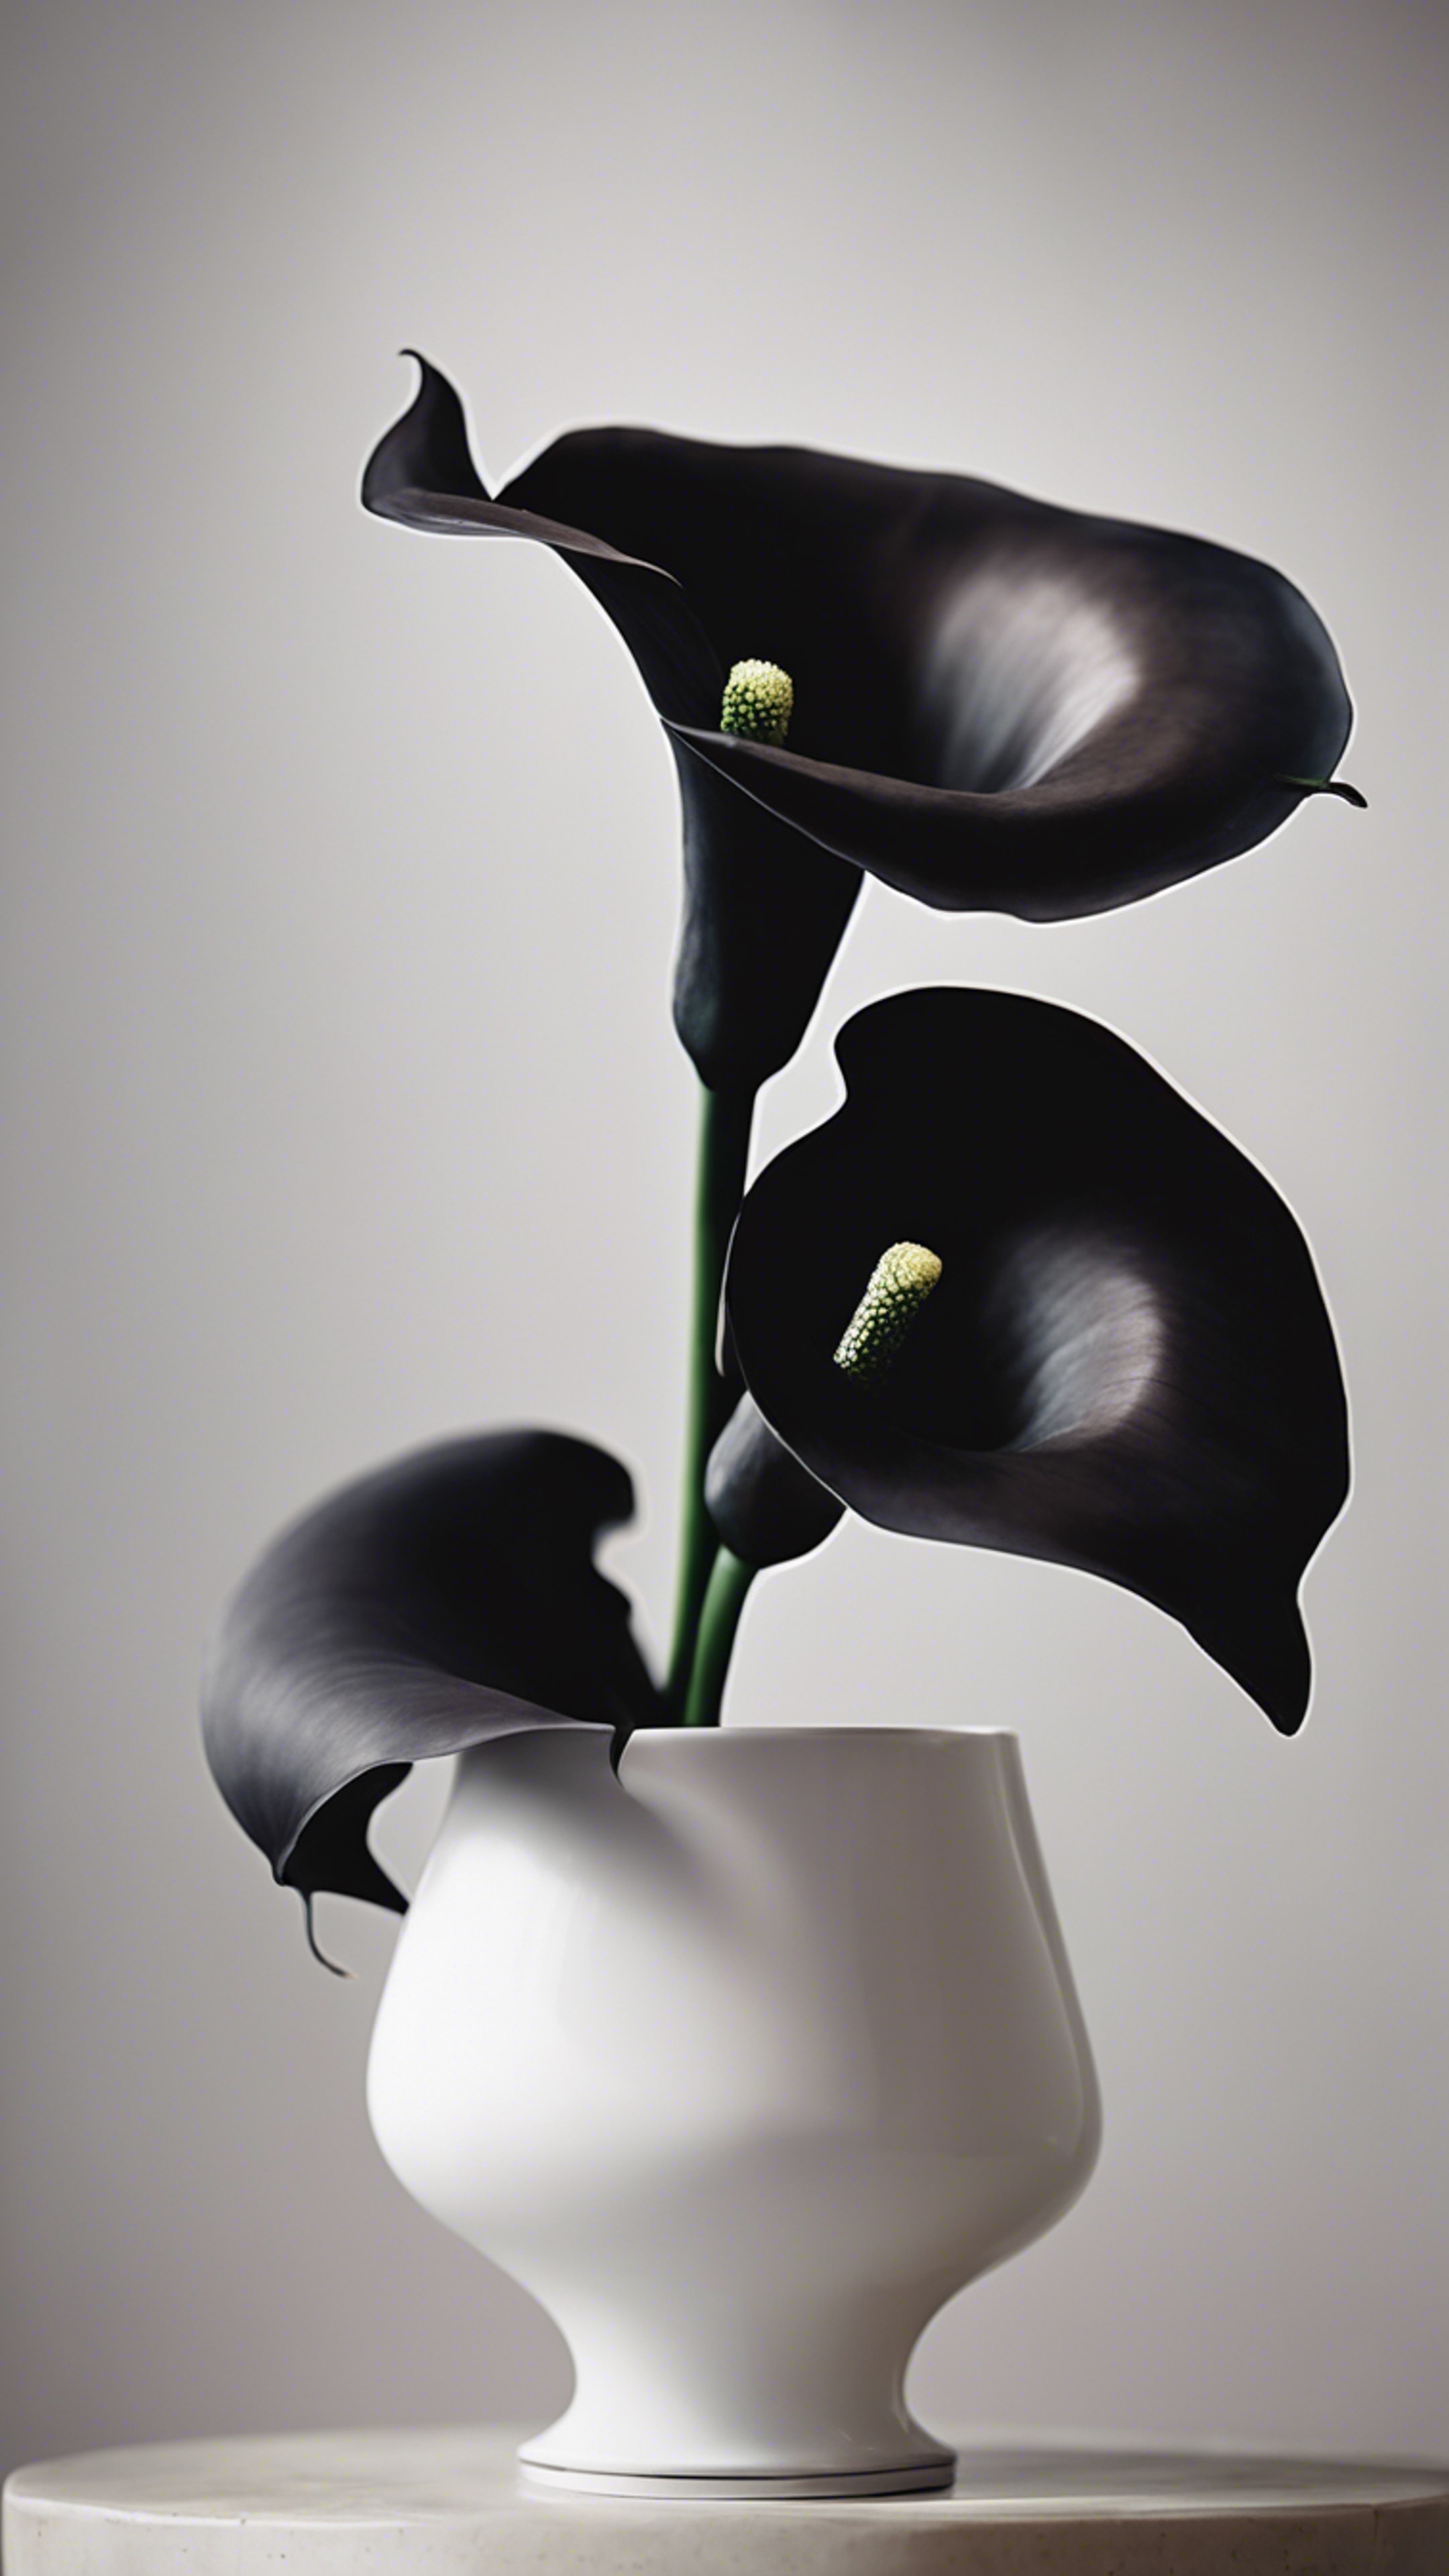 A breathtaking centerpiece featuring a black calla lily in a modern white vase. Hintergrund[9d5d01b6790e4db4a8d5]